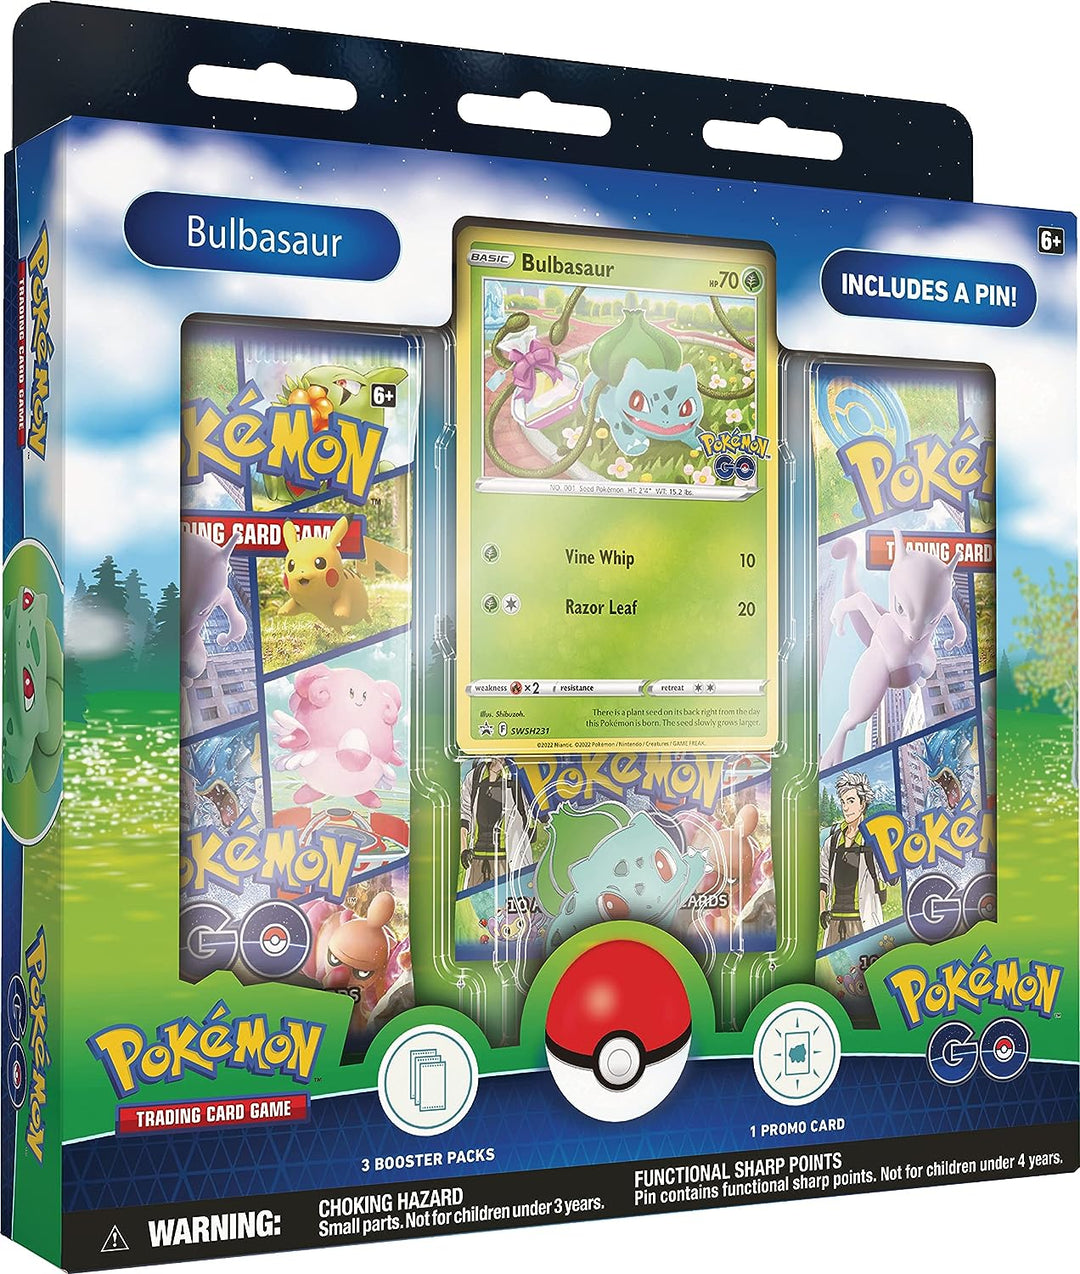 Pokemon TCG: Pokemon GO Pin Collection – Bulbasaur (1 Foil Promo Card, 1 Collector’s Pin & 3 Booster Packs